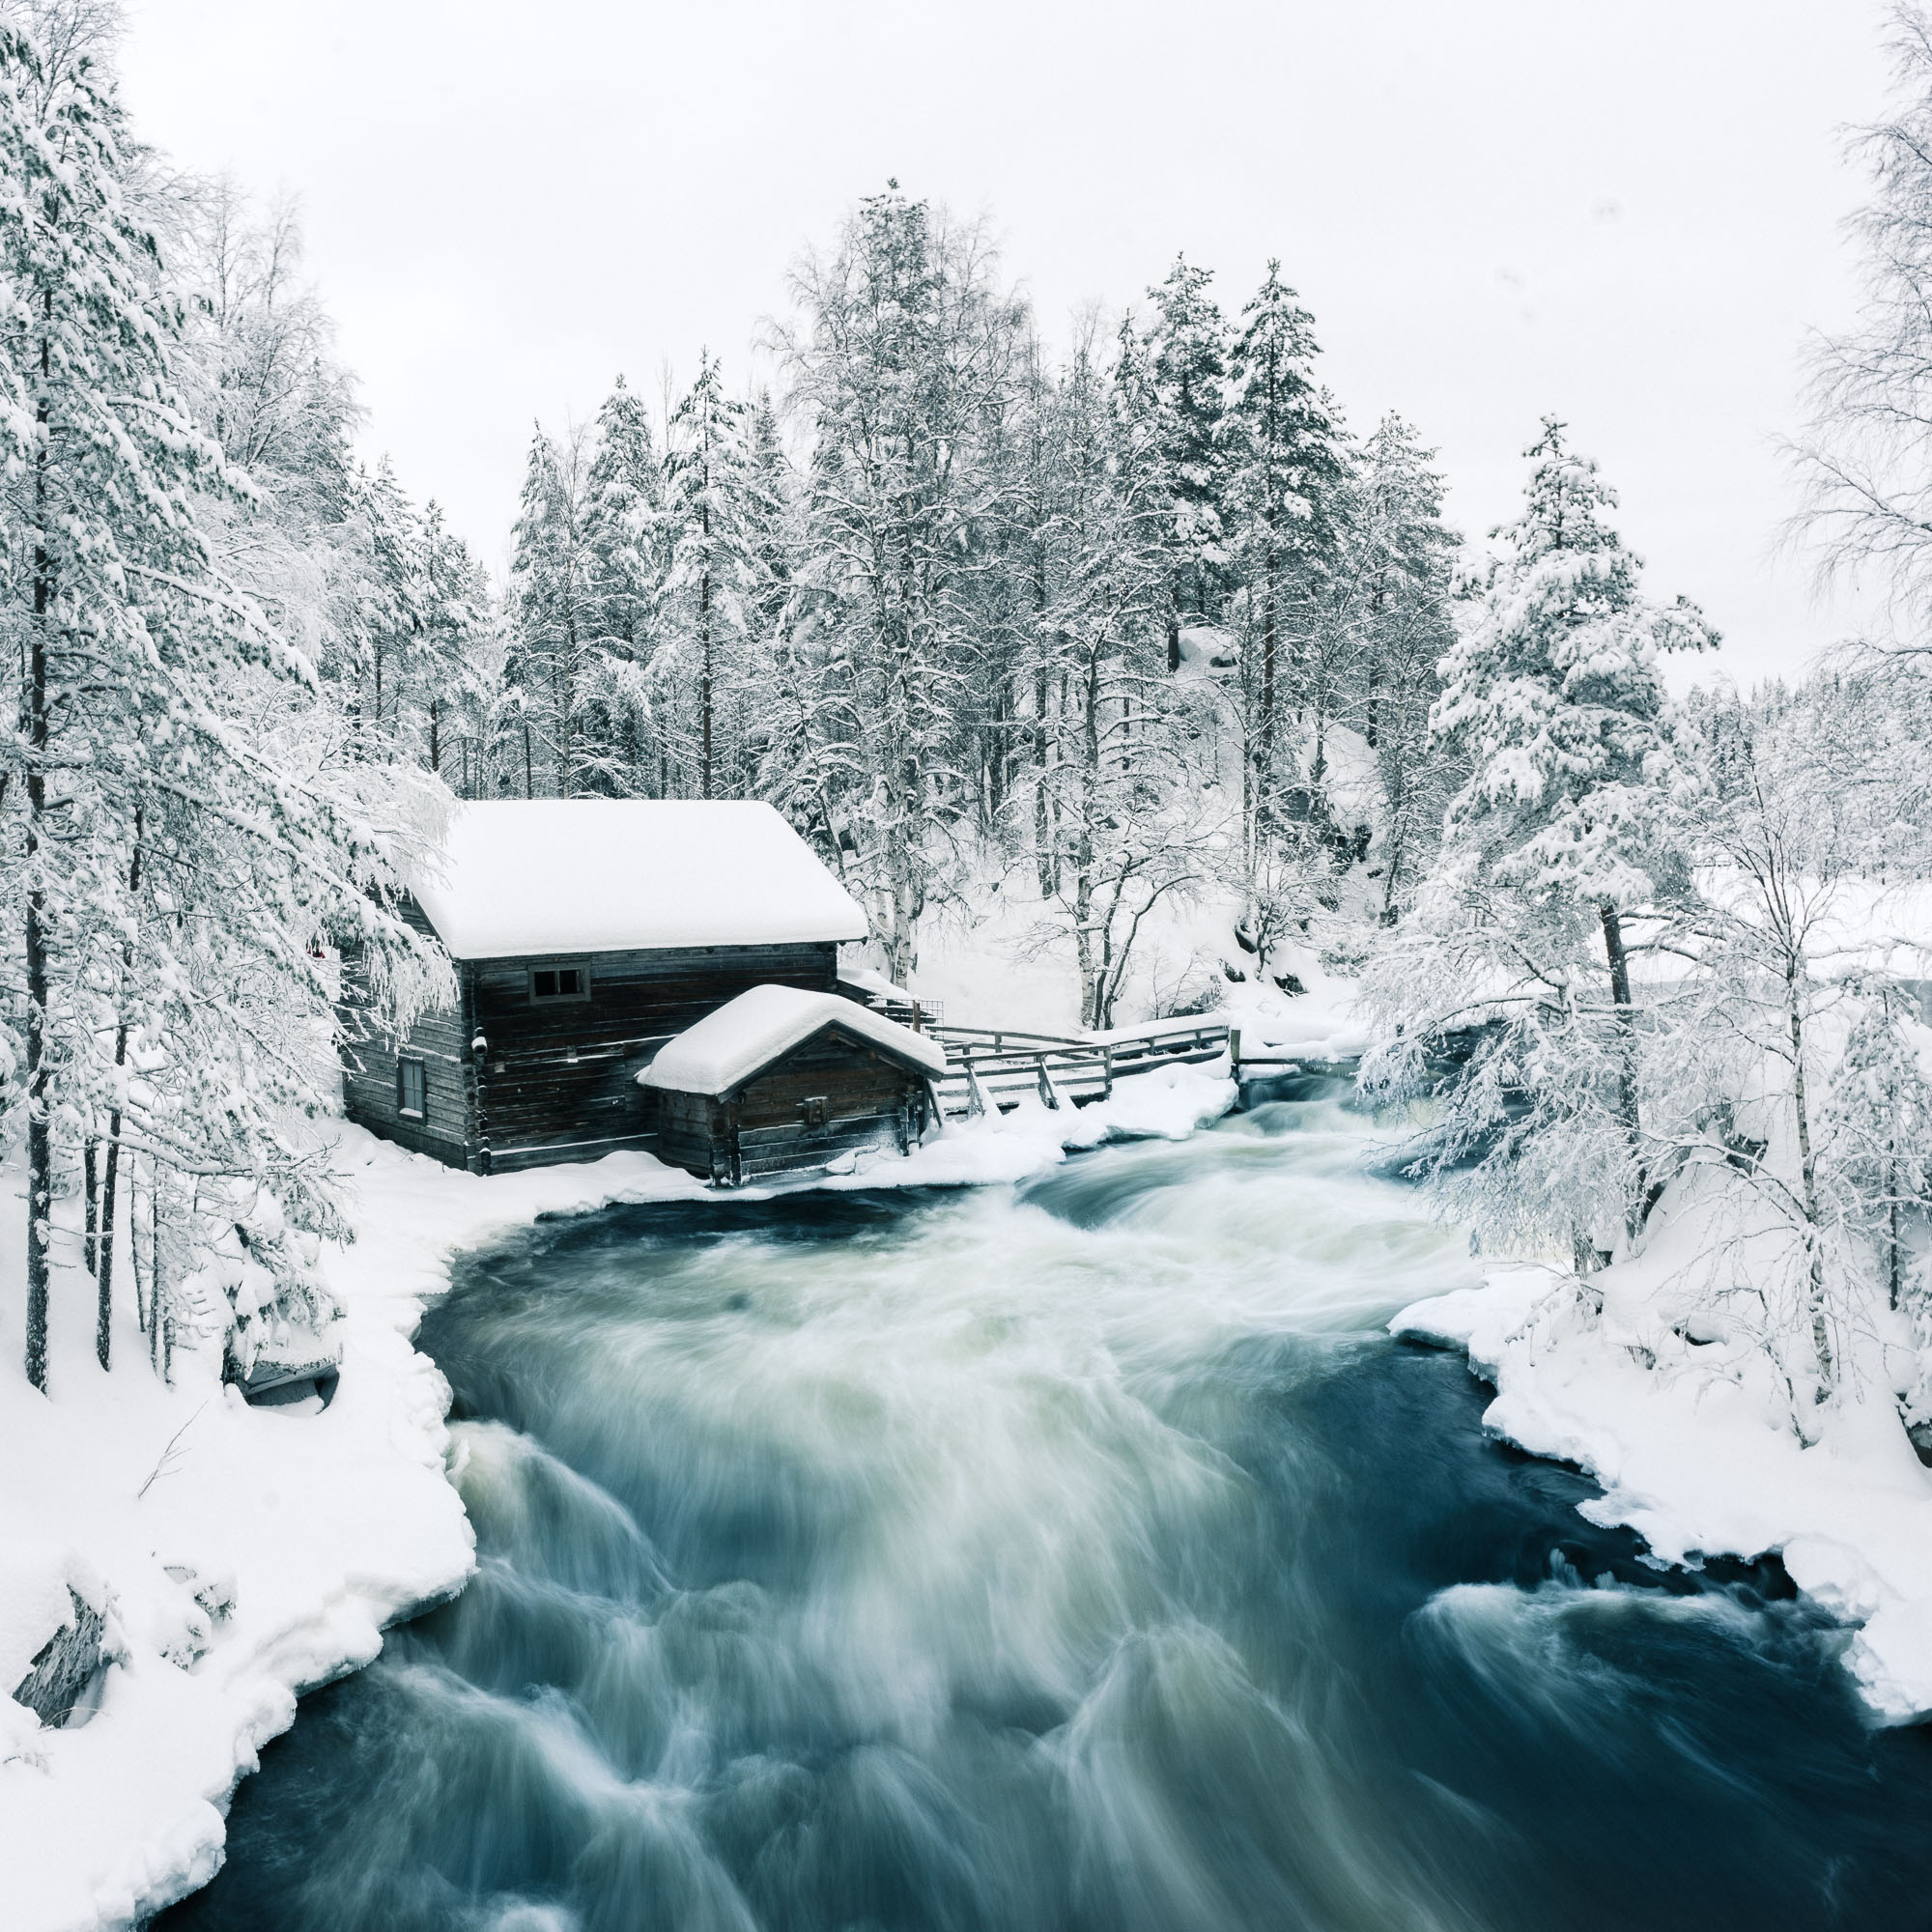 Log Cabin Oulanka National Park Finland in winter